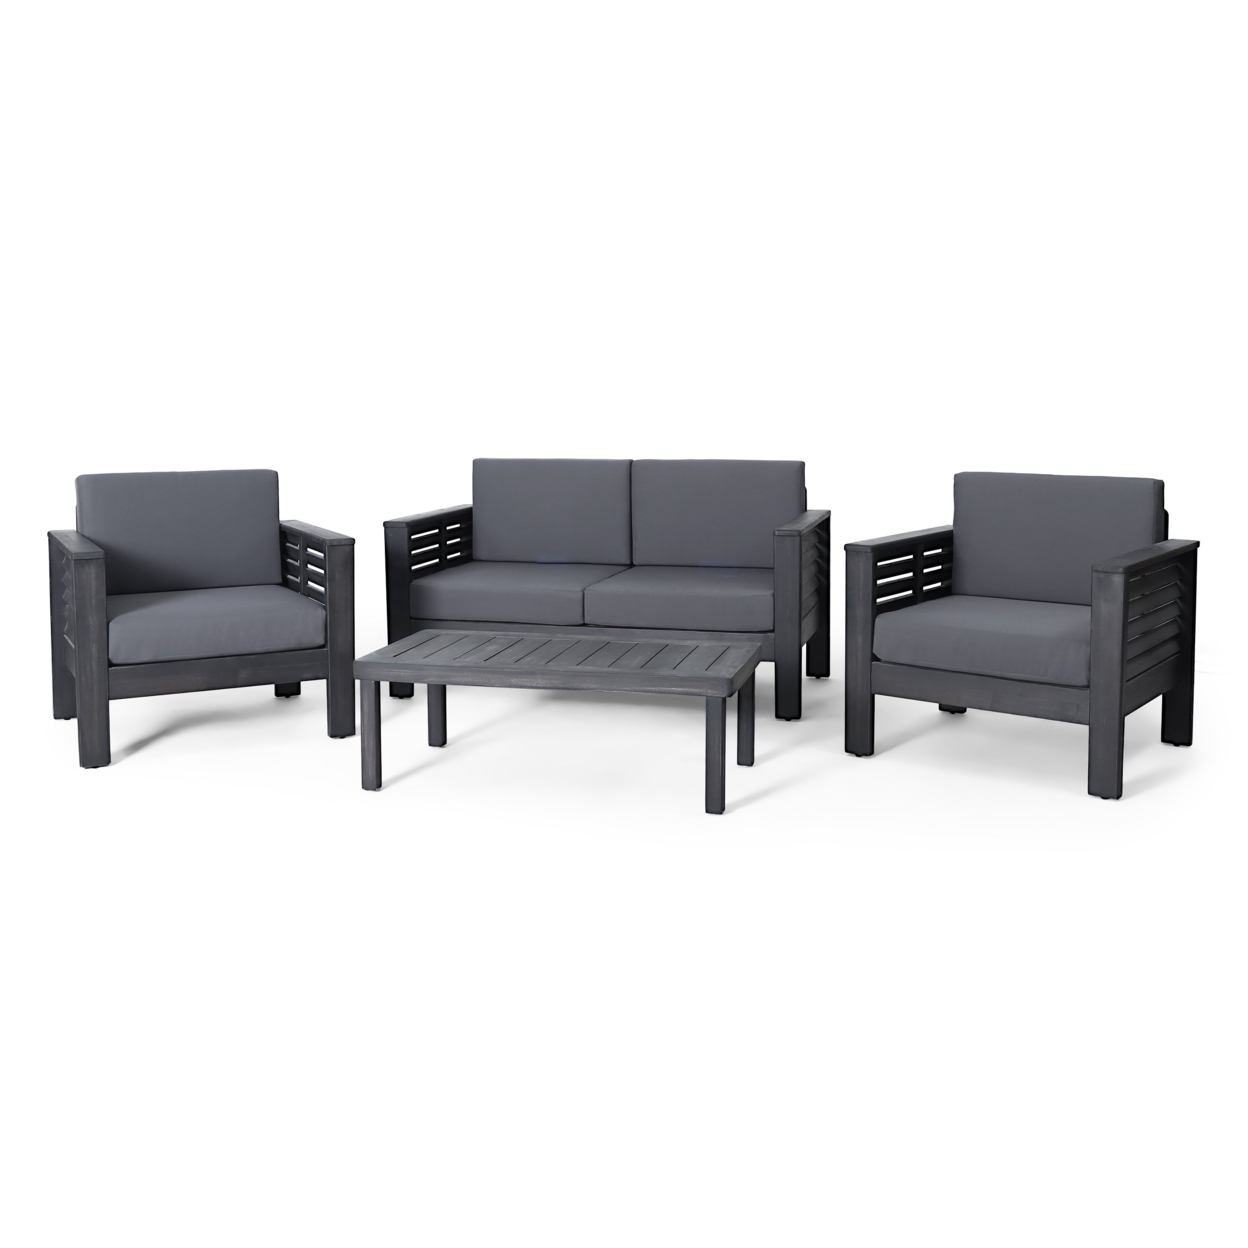 Rabun Outdoor Acacia Wood 4 Seater Chat Set With Cushions - Dark Gray